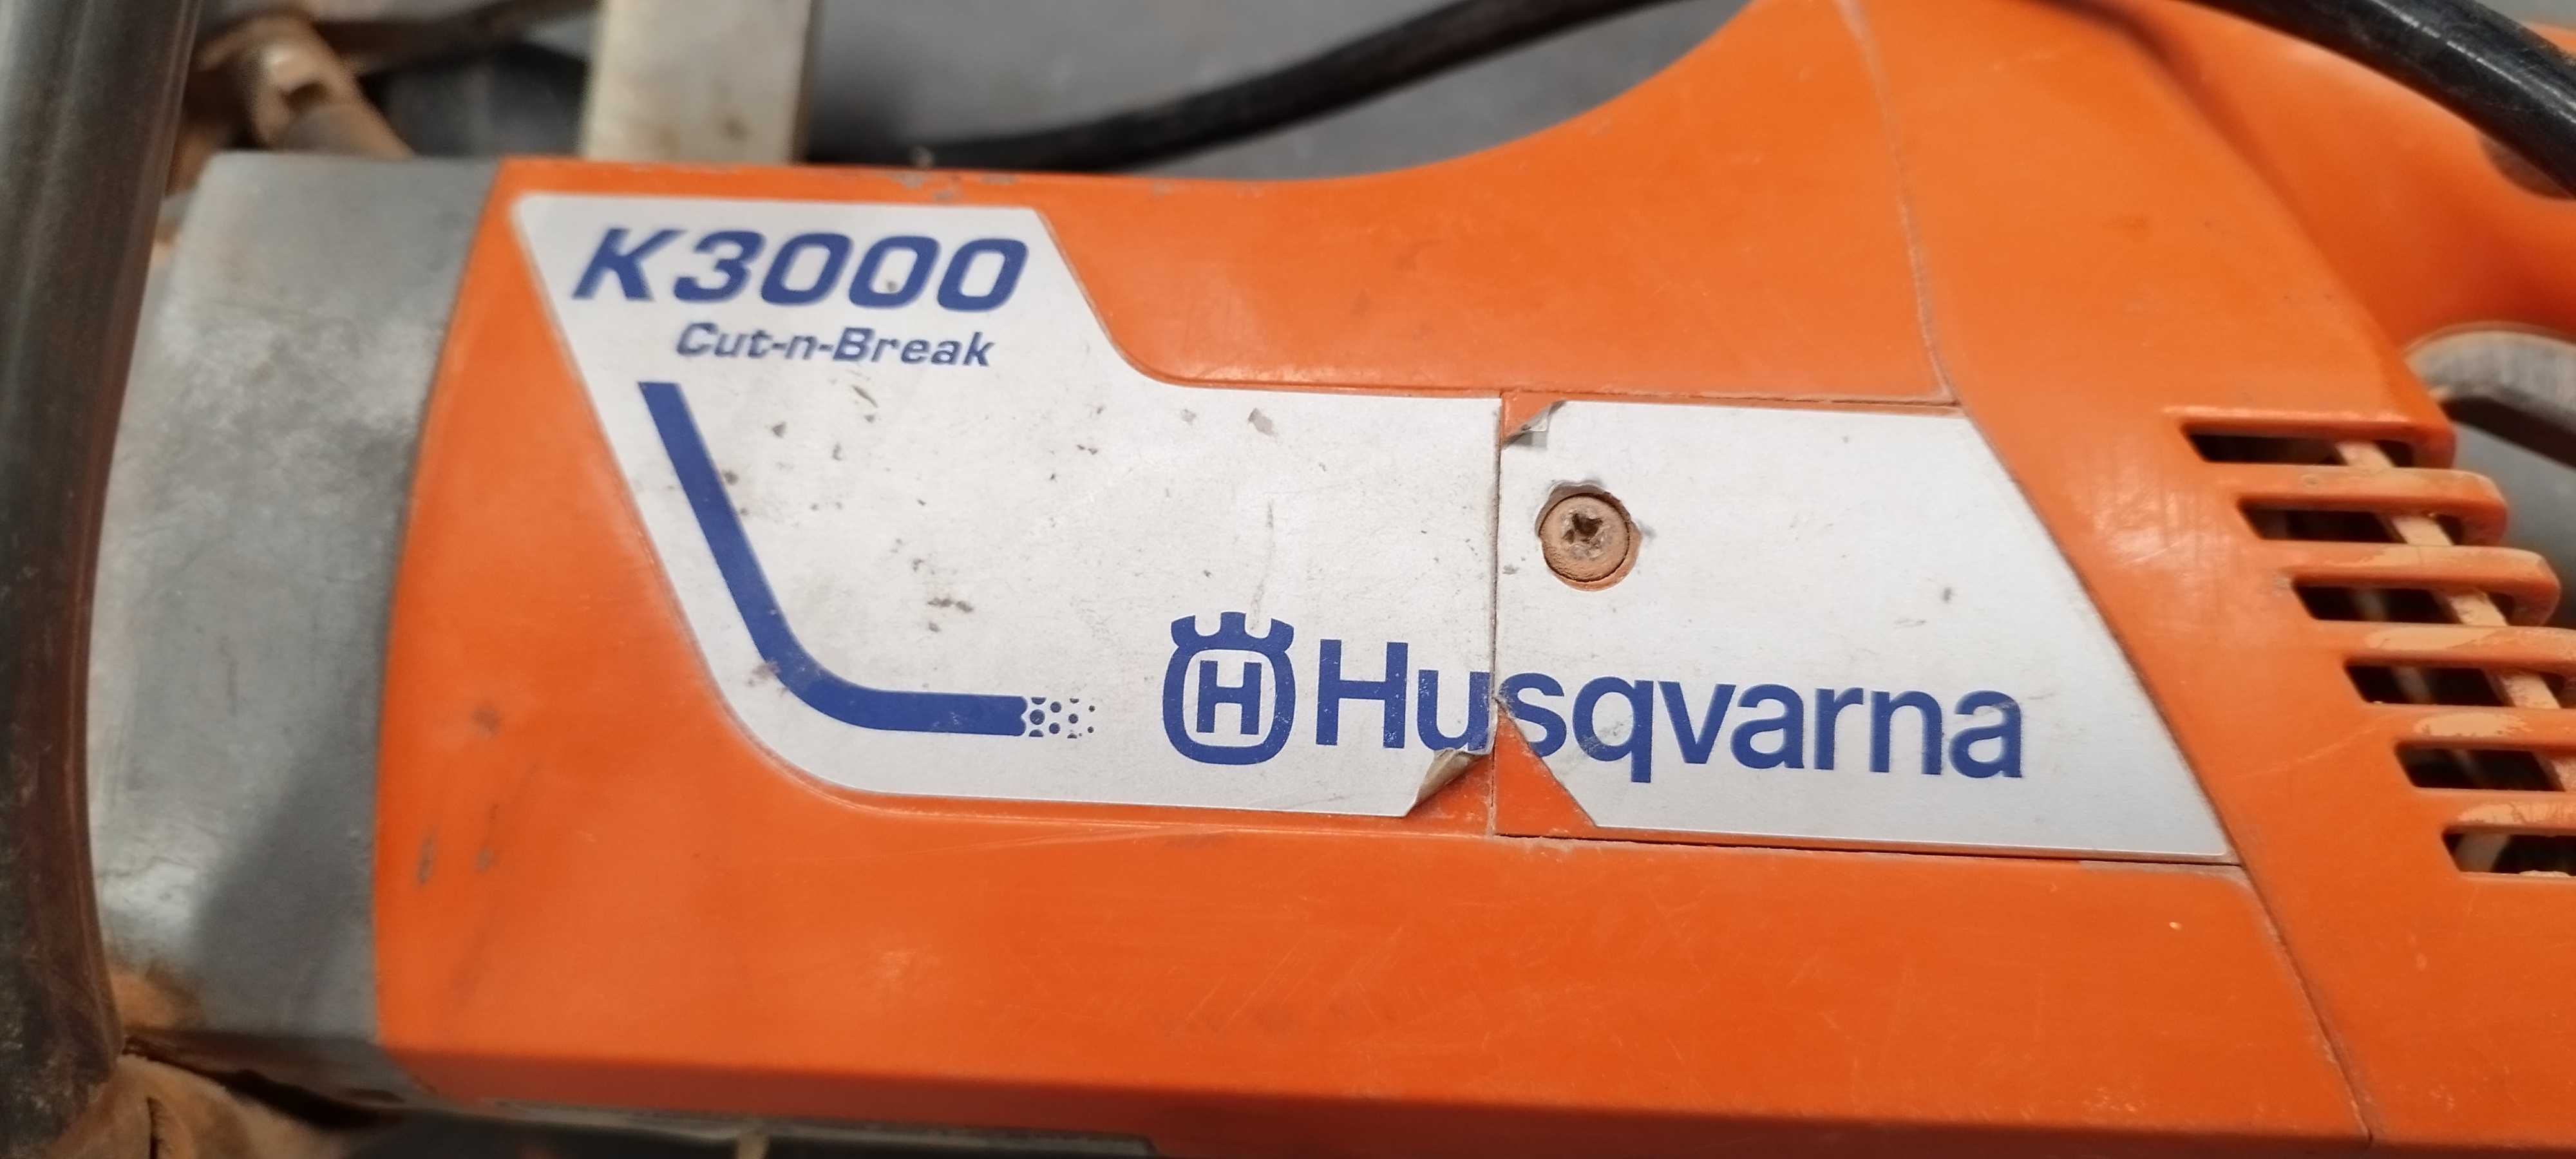 Piła do betonu Bruzdownica Husqvarna K3000 Cut-n-Break VAT